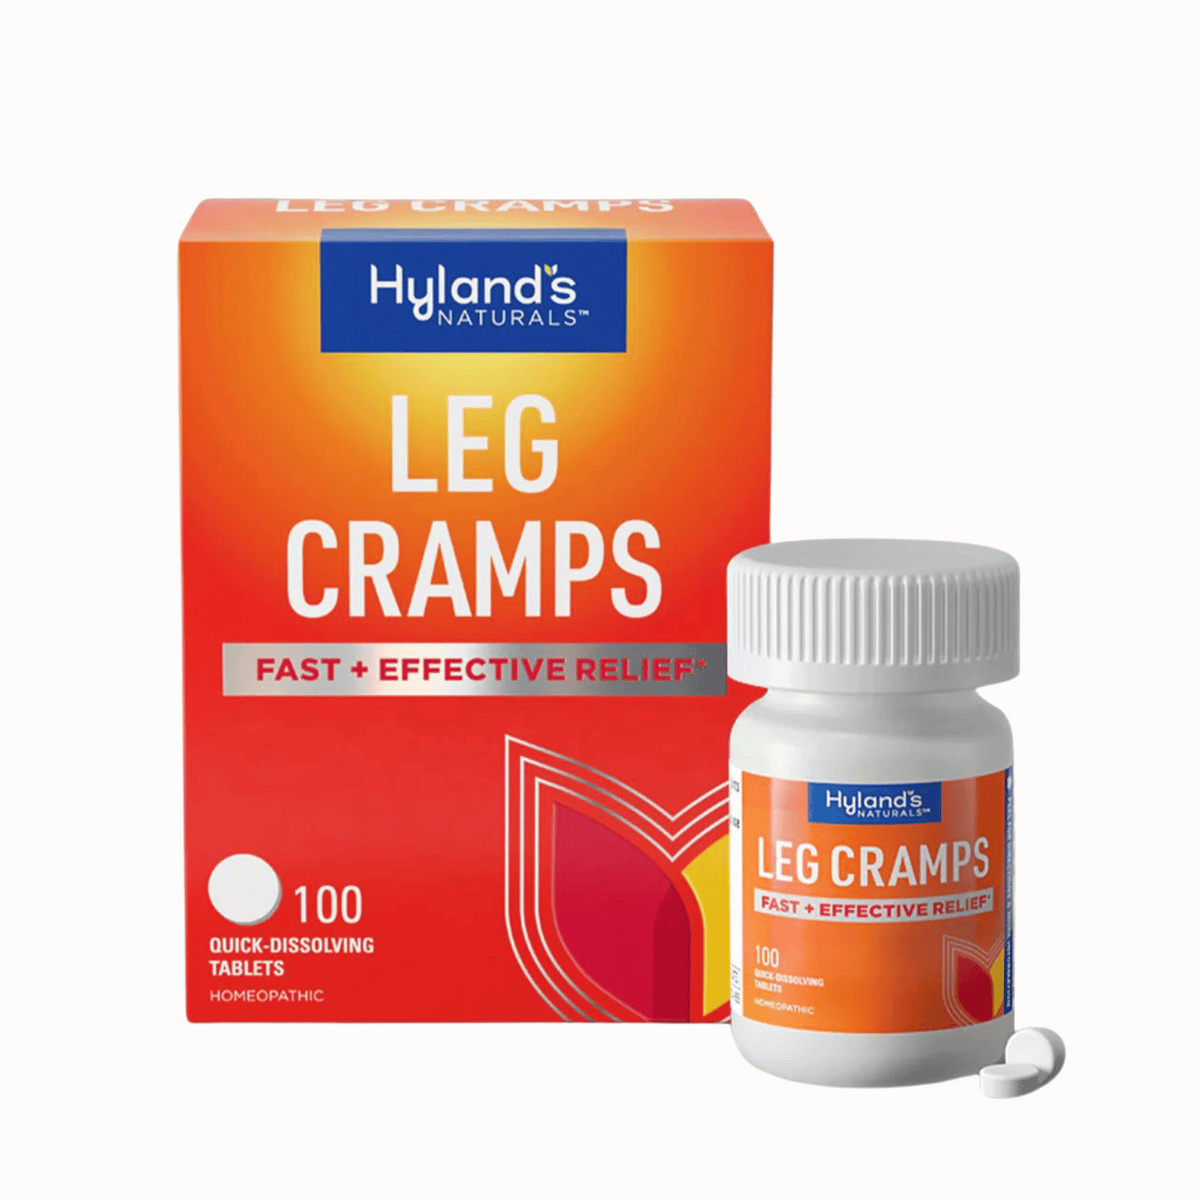 Primary Image of Leg Cramps